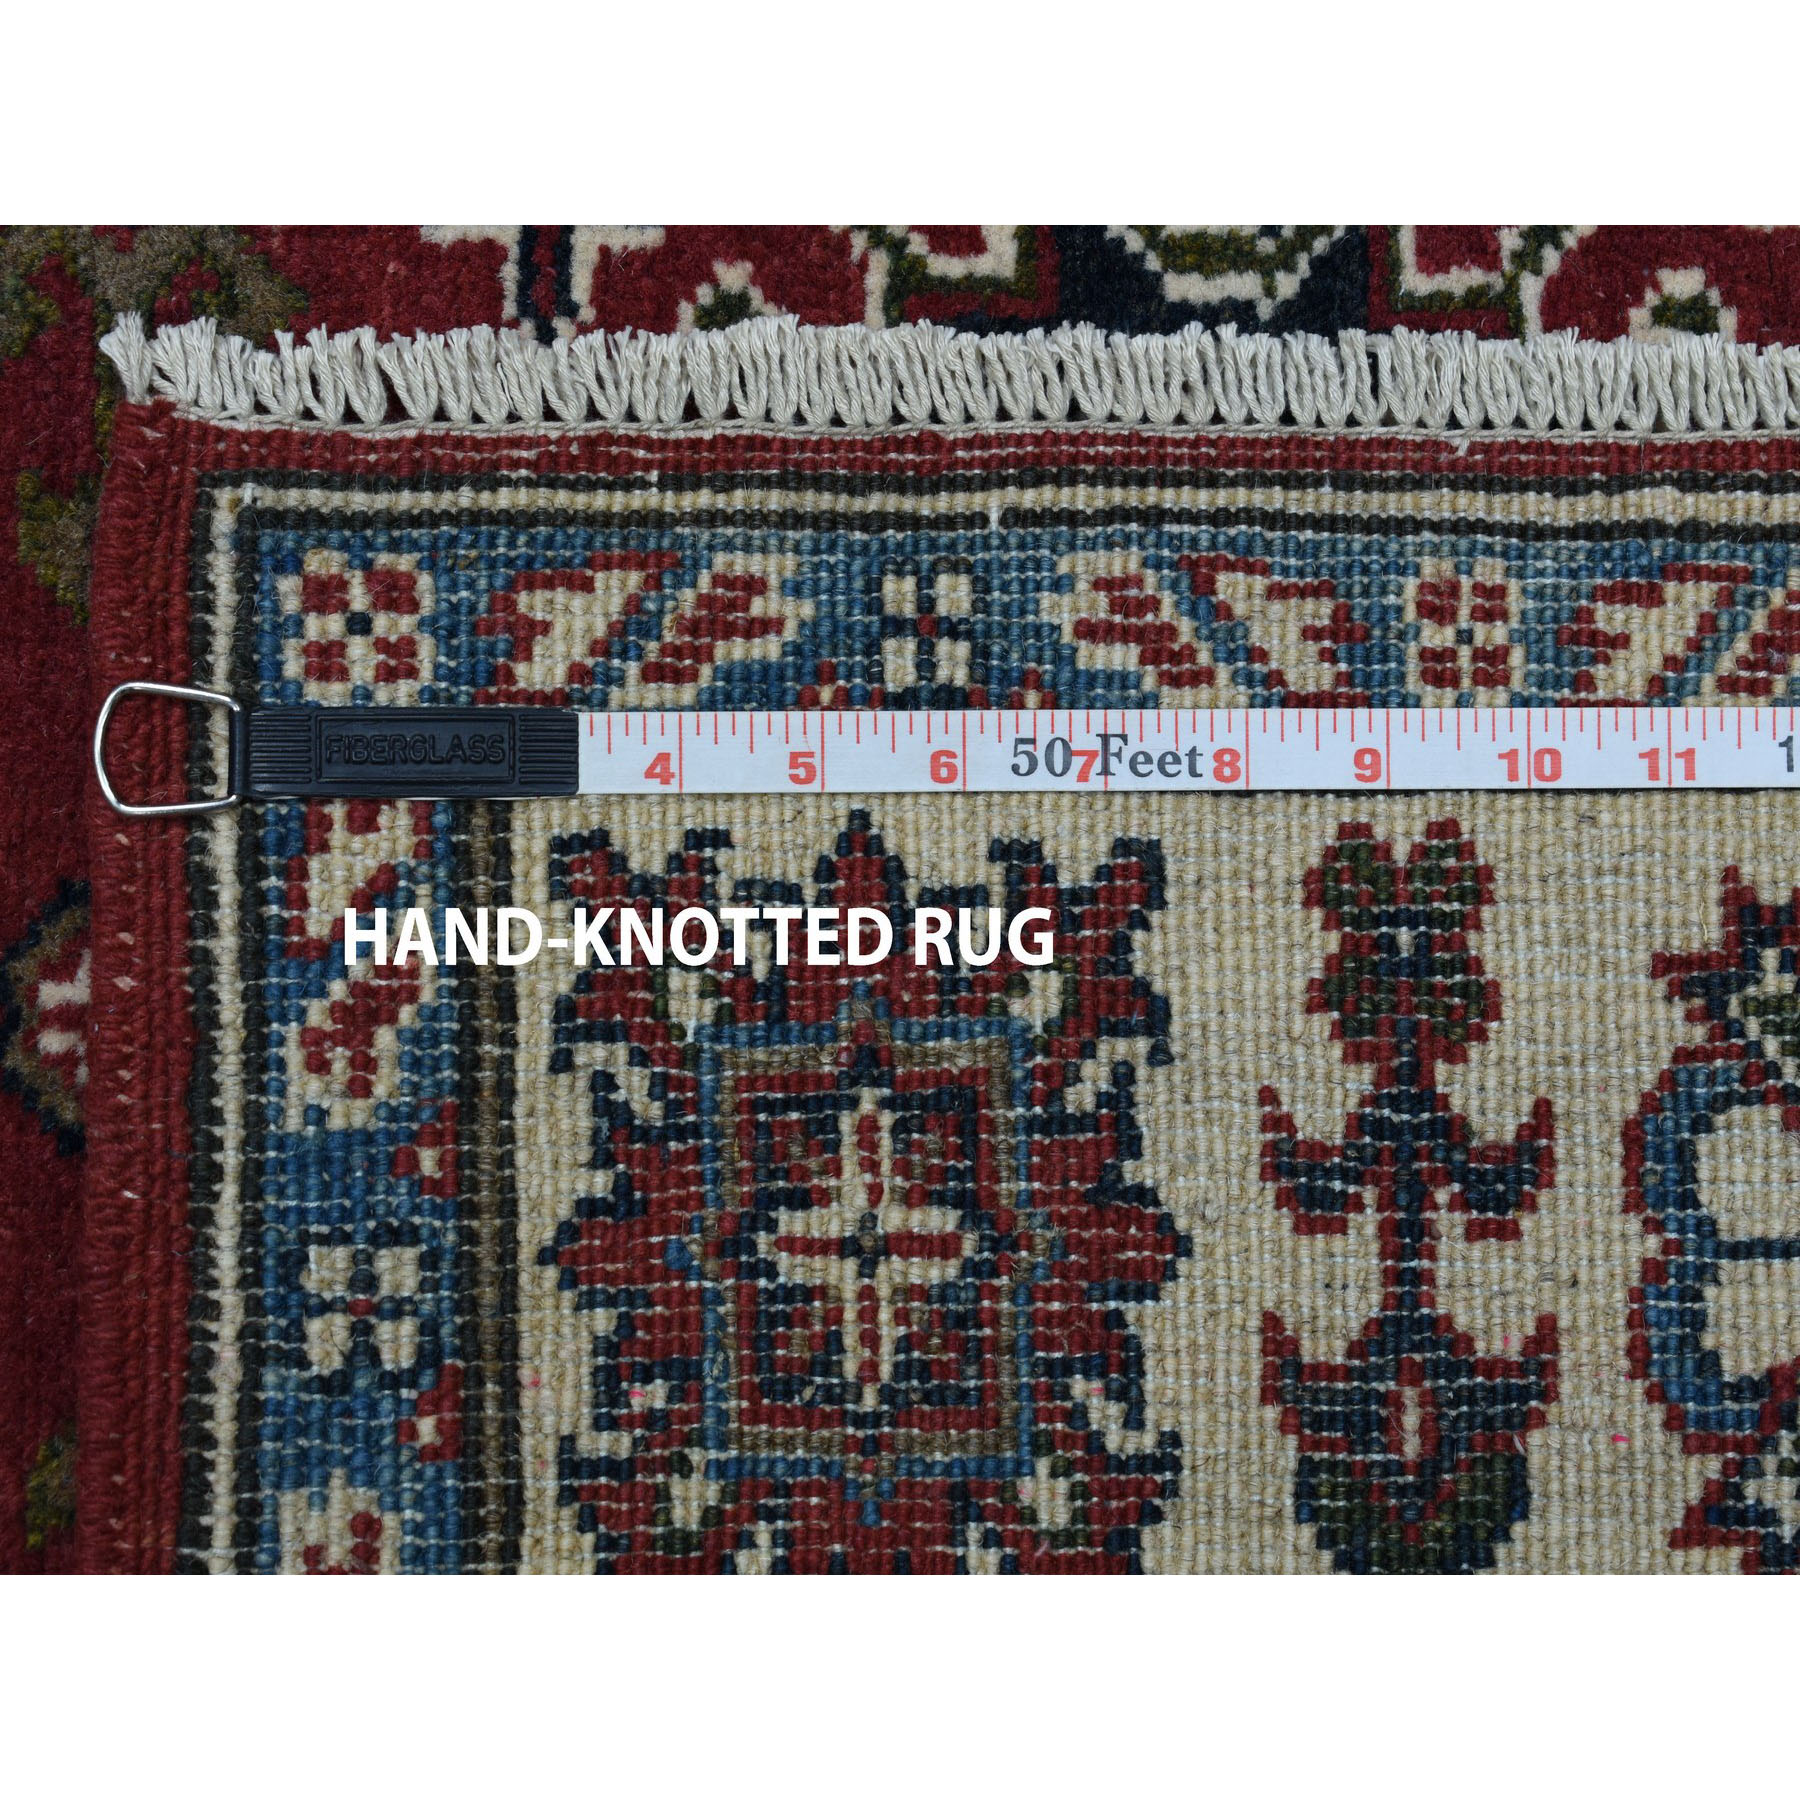 5-x6-10  Red Geometric Design Kazak Pure Wool Hand-Knotted Oriental Rug 